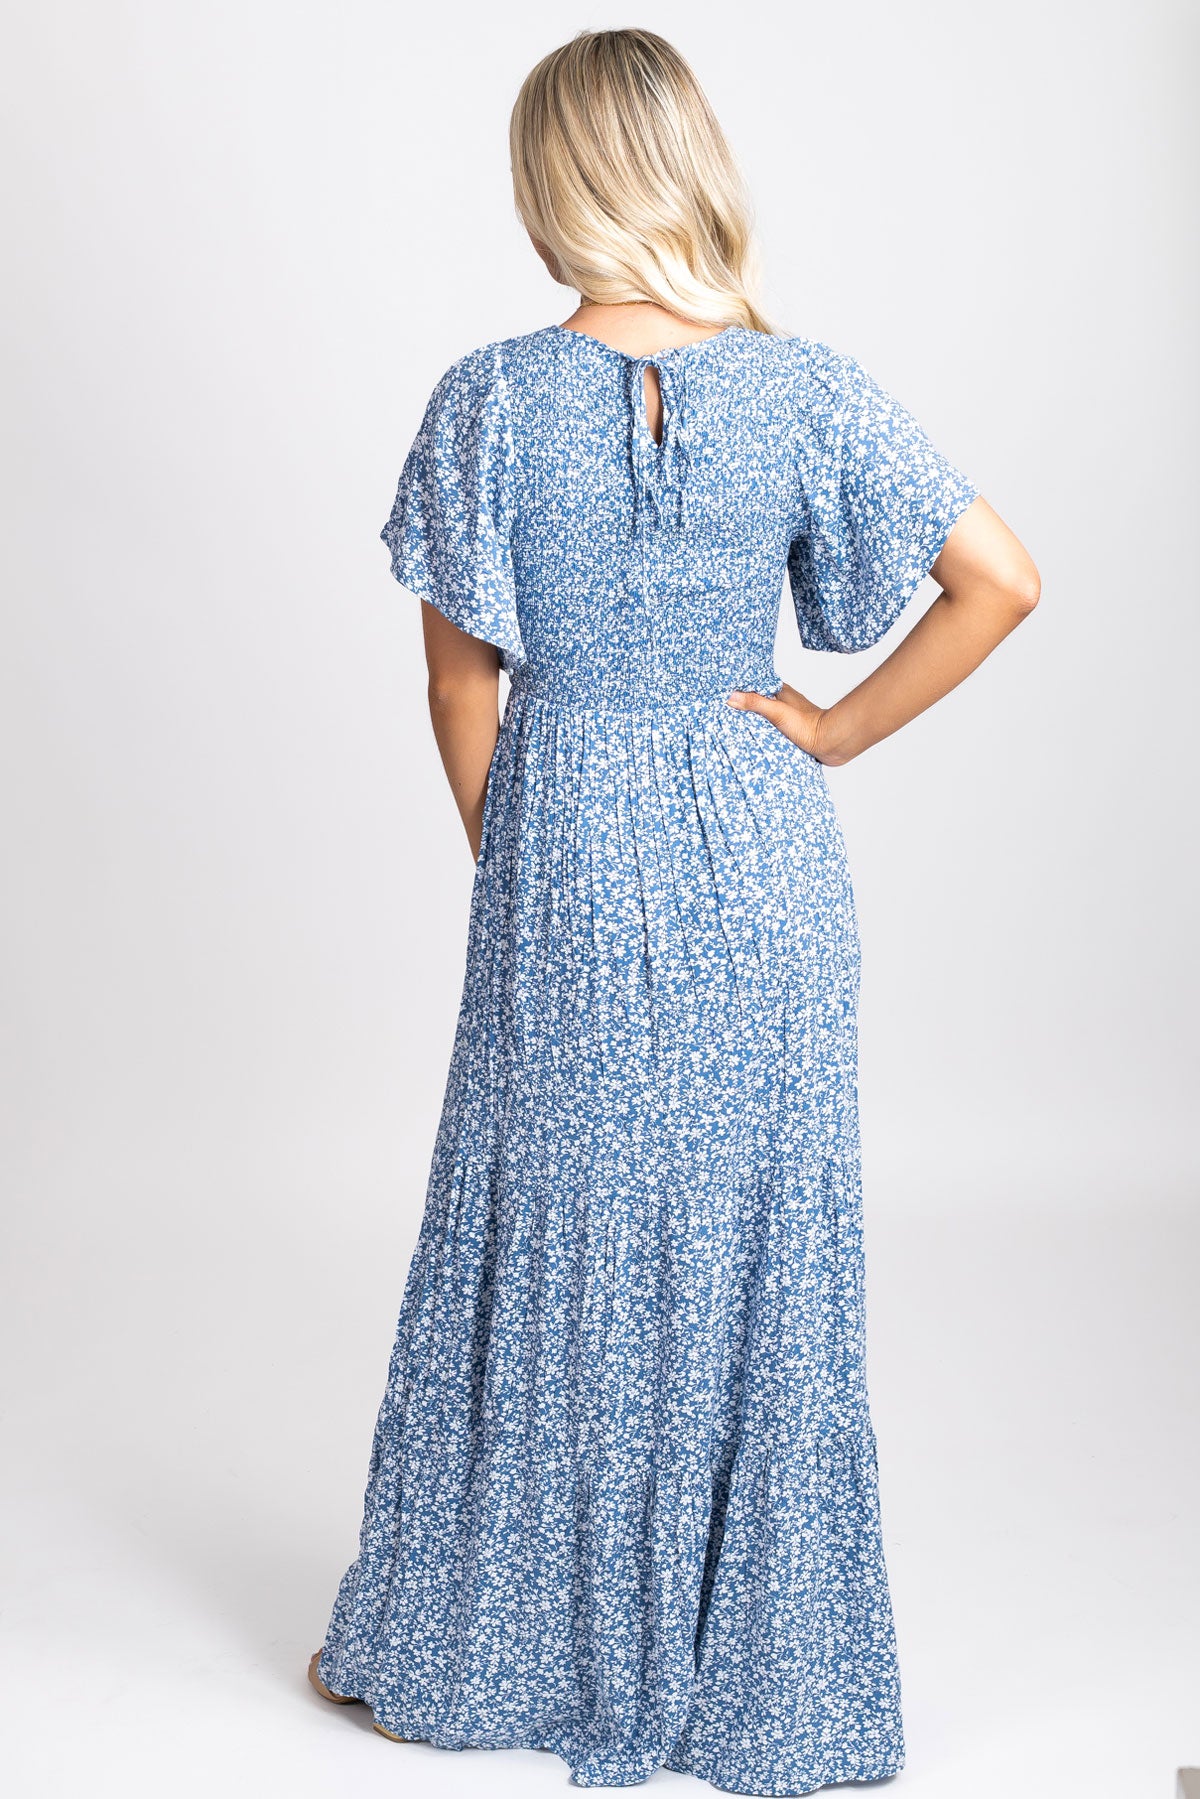 women's maxi dress blue floral patterened dress